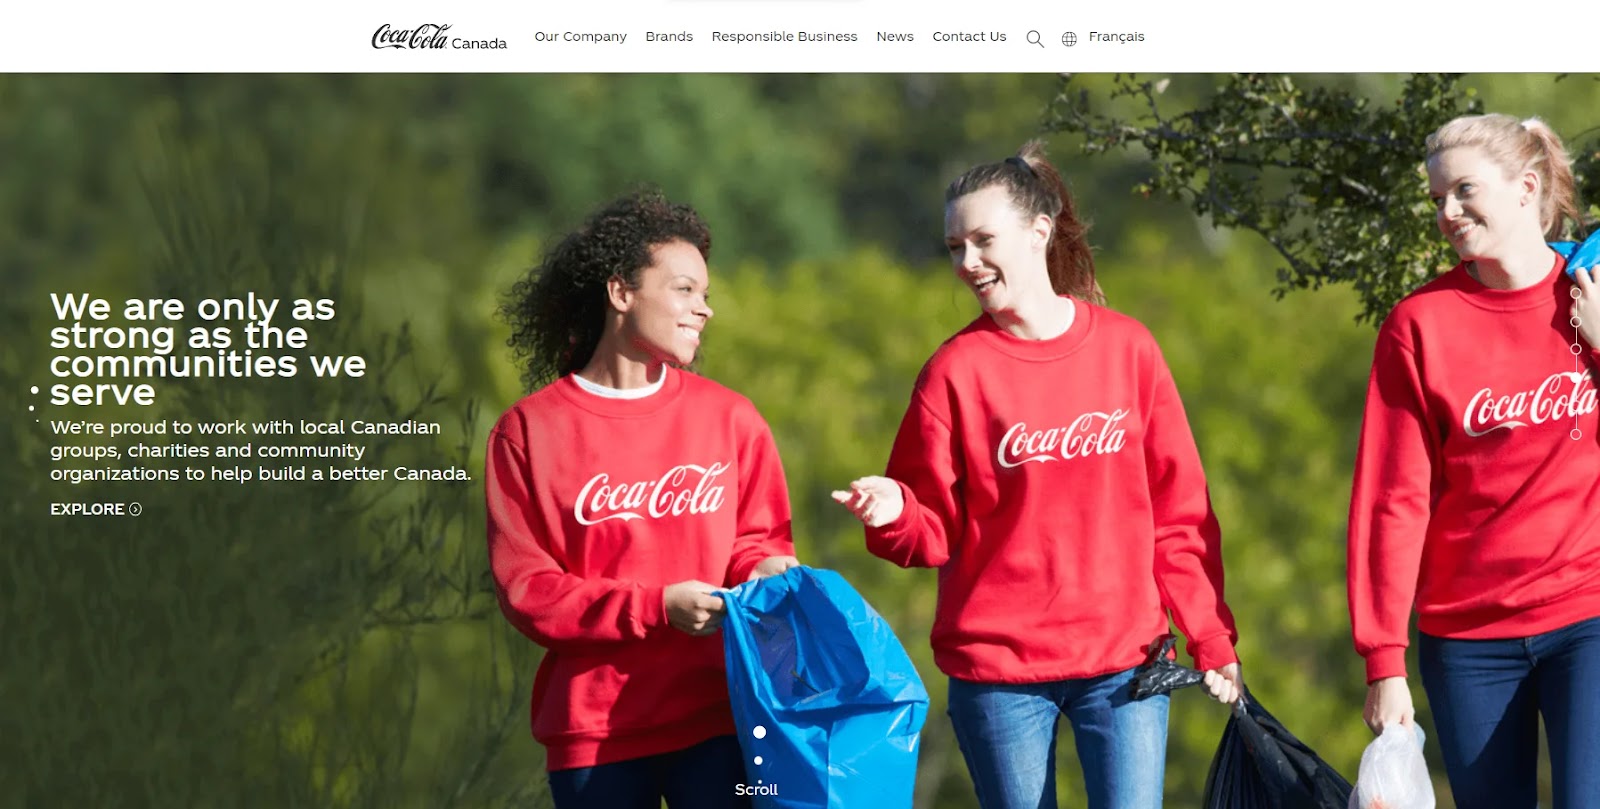 Coca-Cola’s homepage in Canada